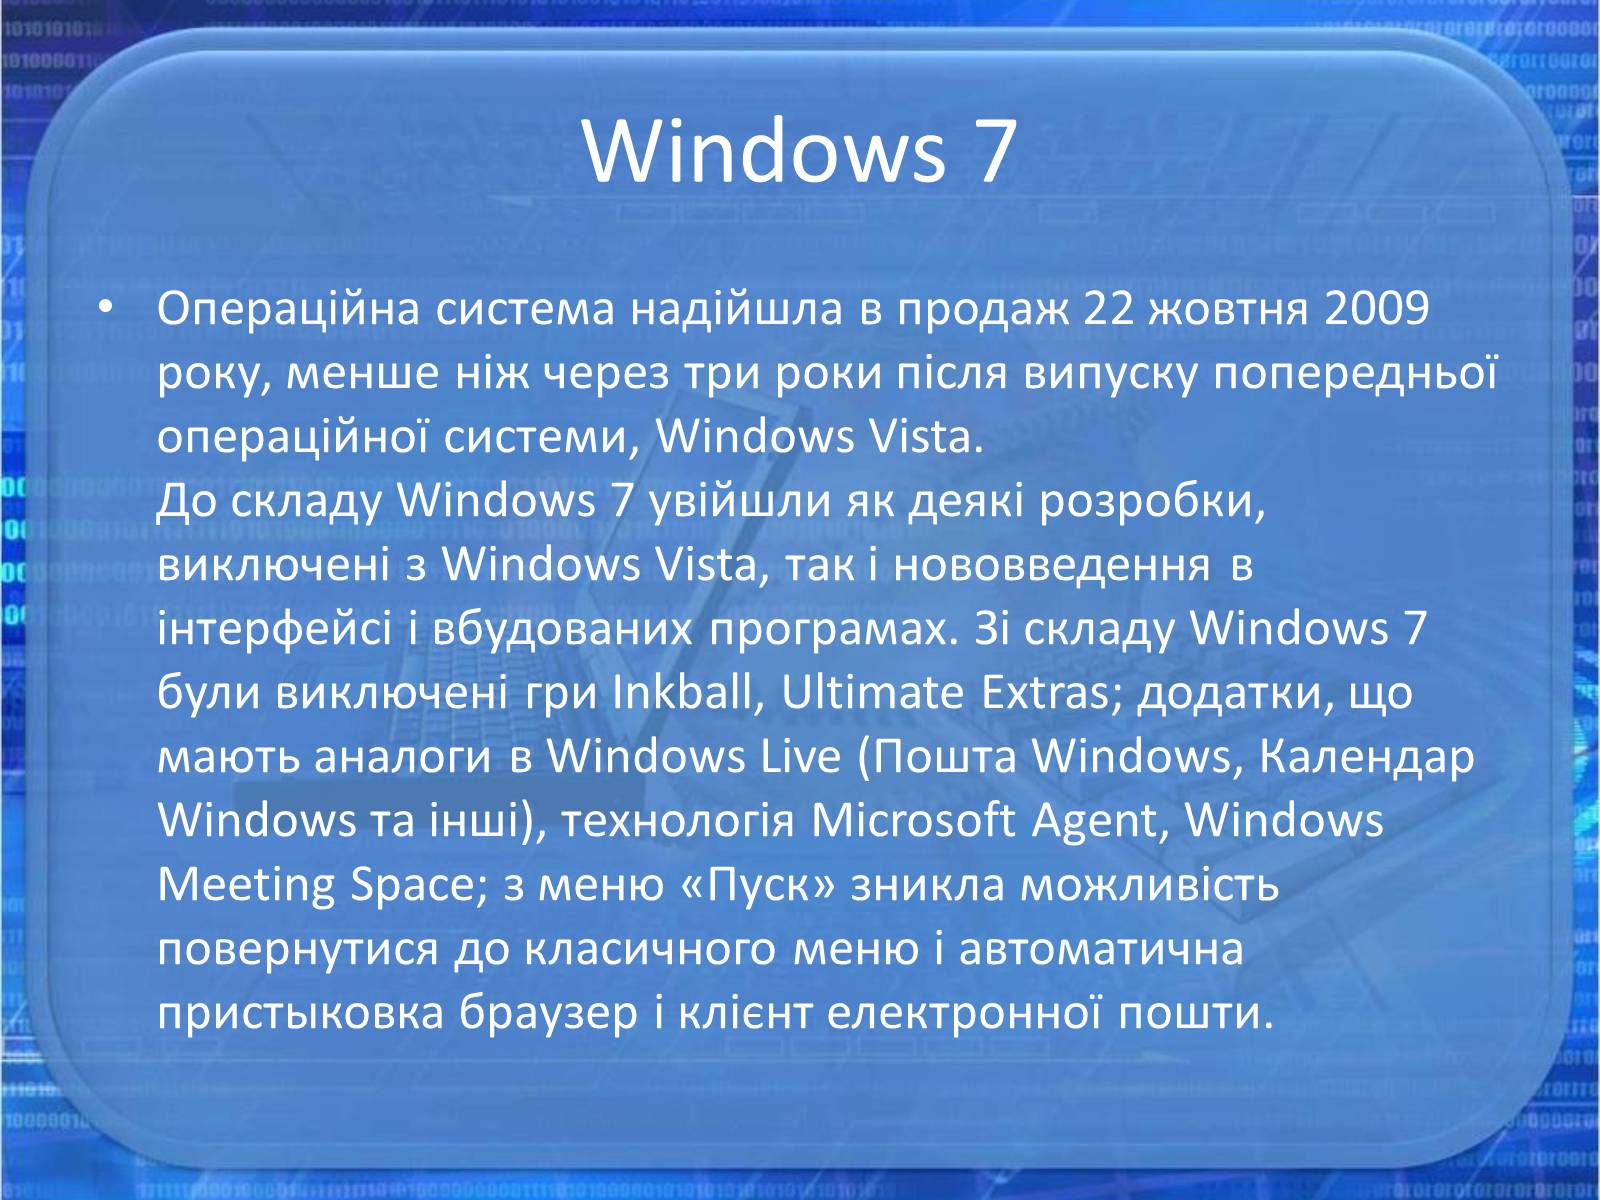 Windows story. История создания виндовс. История создания операционной системы Windows. История создания виндовс 7. Операционная система Windows история.